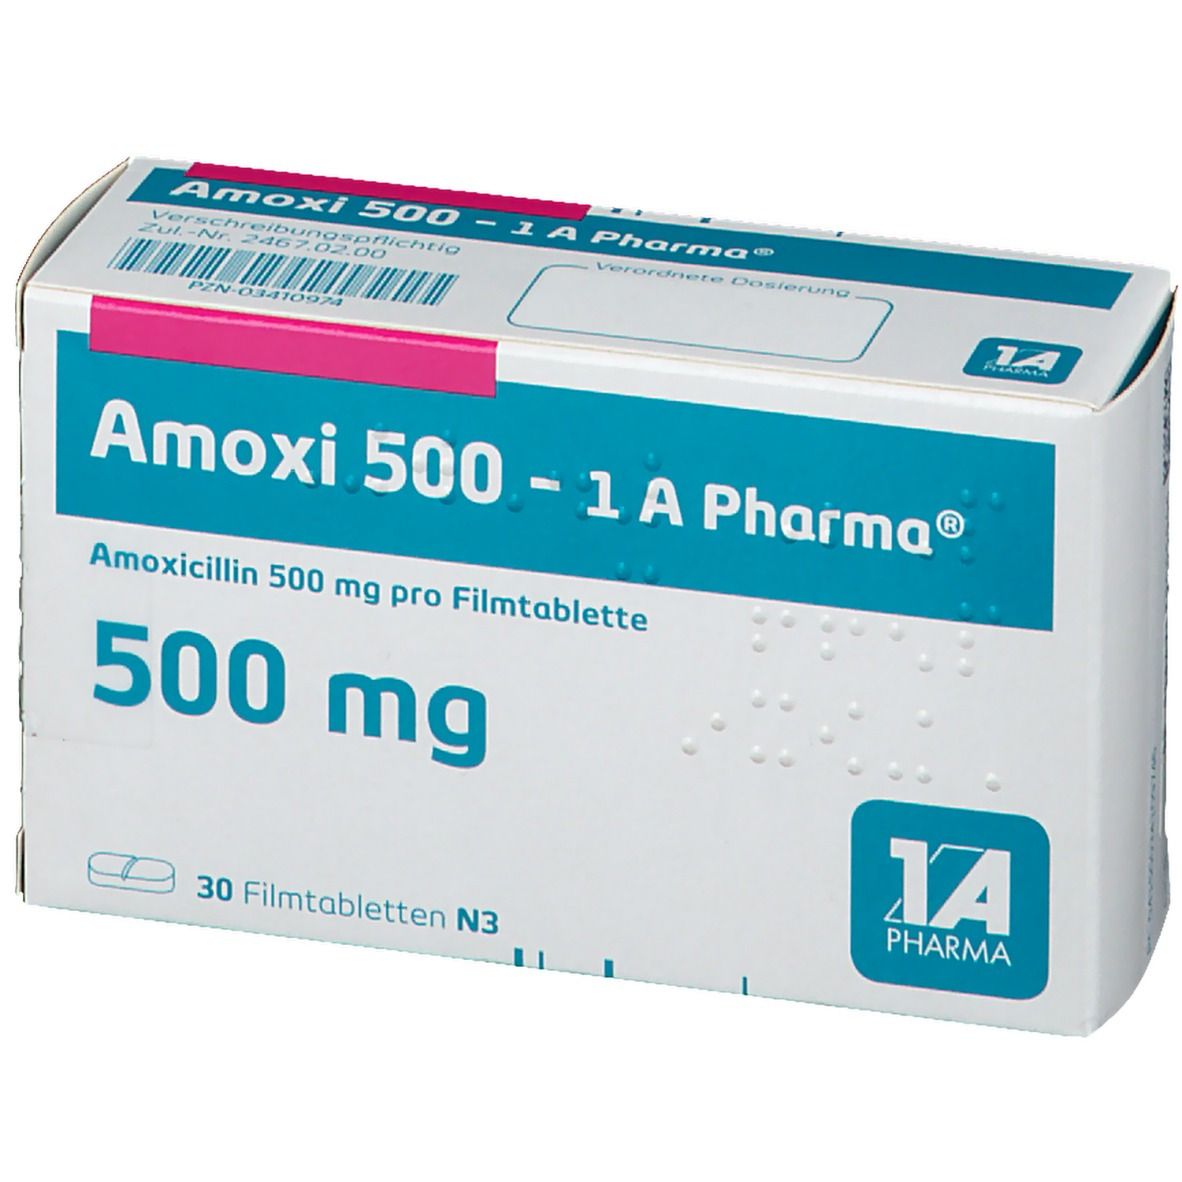 Amoxi 500 - 1 A Pharma®